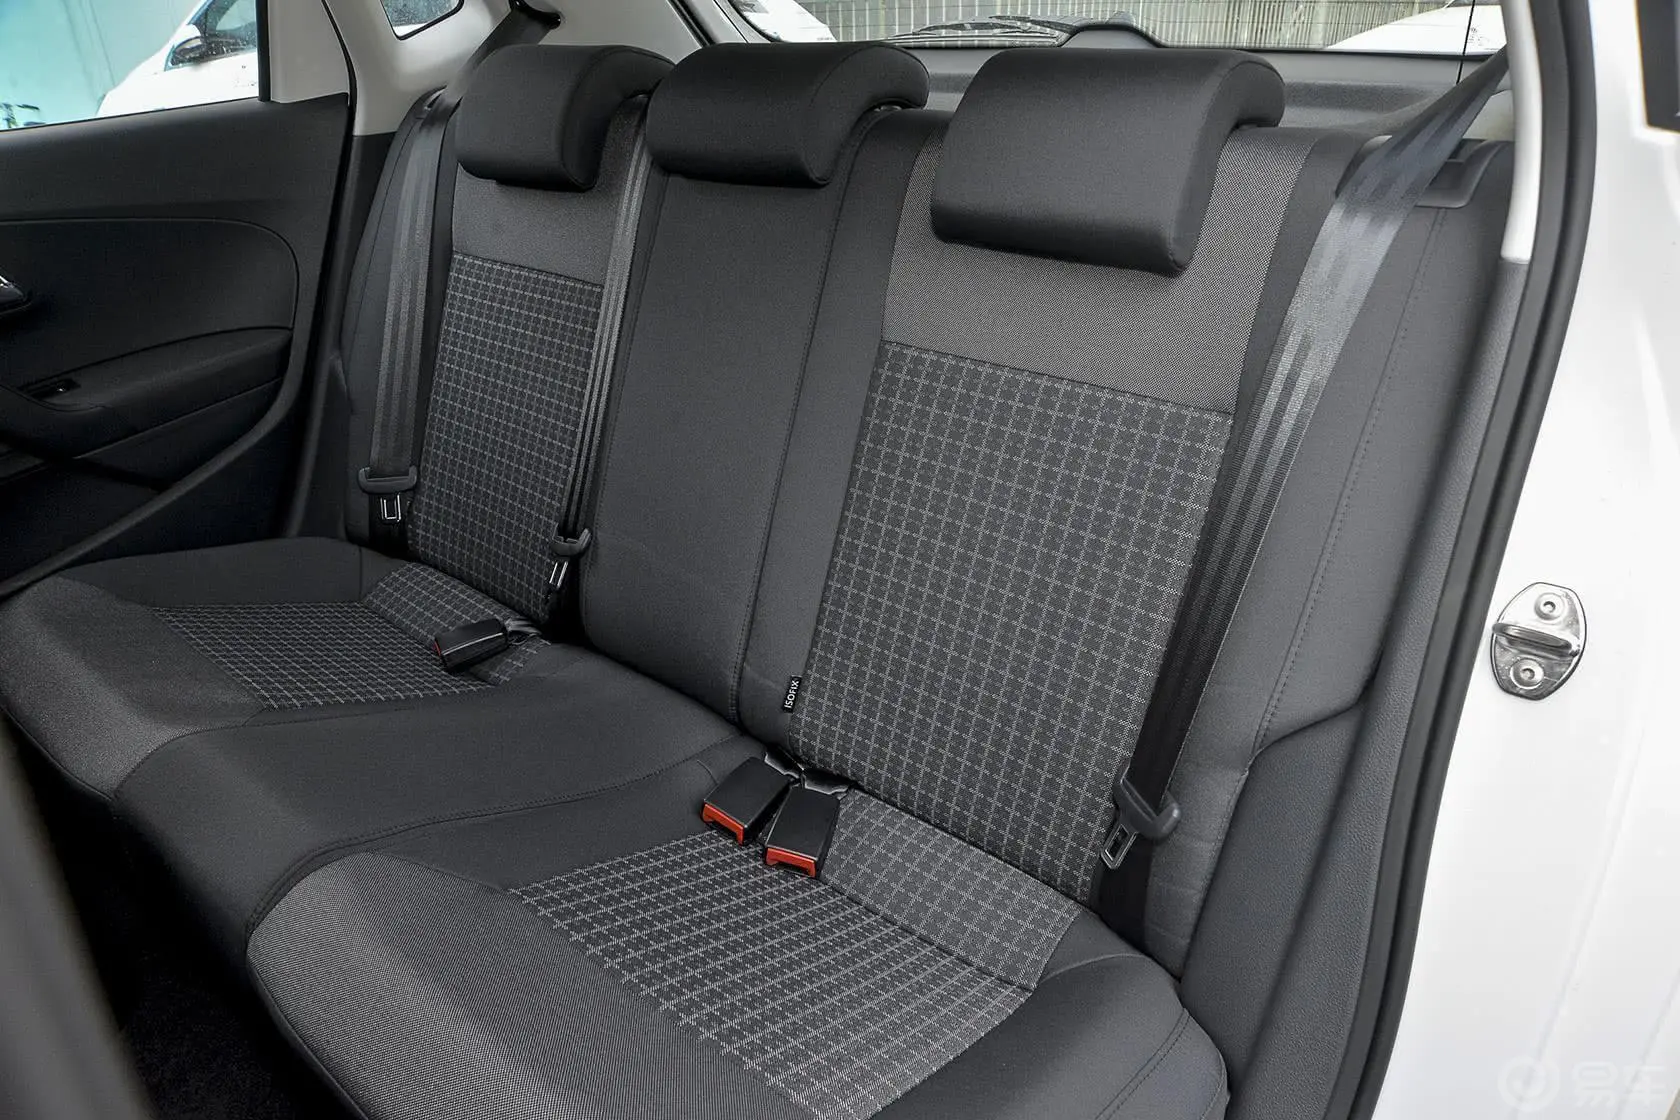 Polo1.4L 自动 舒适版驾驶员座椅